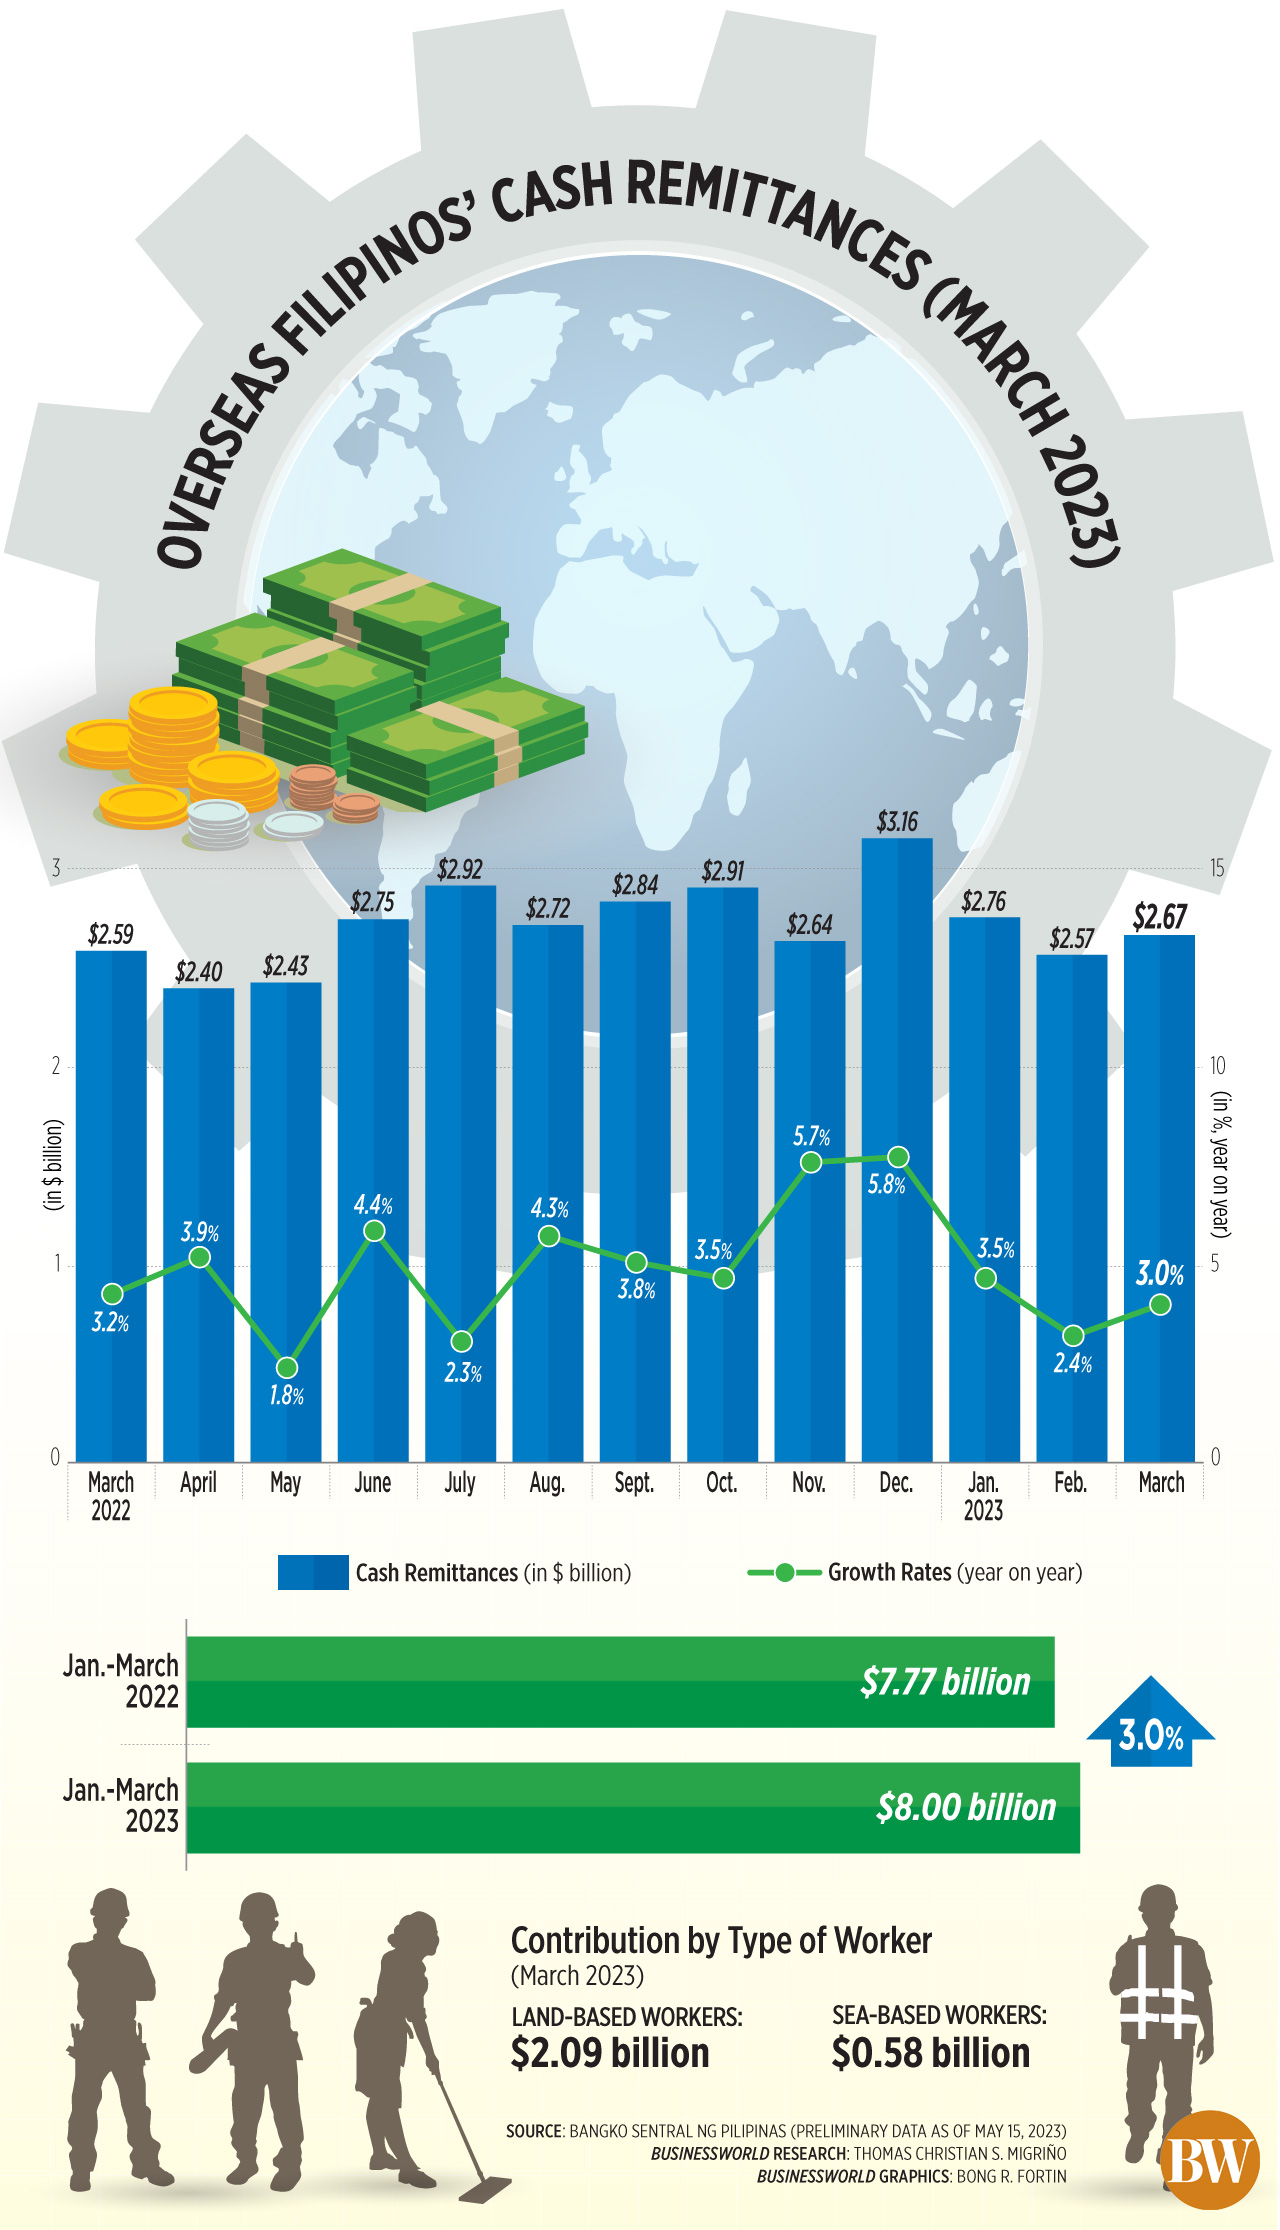 Overseas Filipinos’ cash remittances (March 2023)